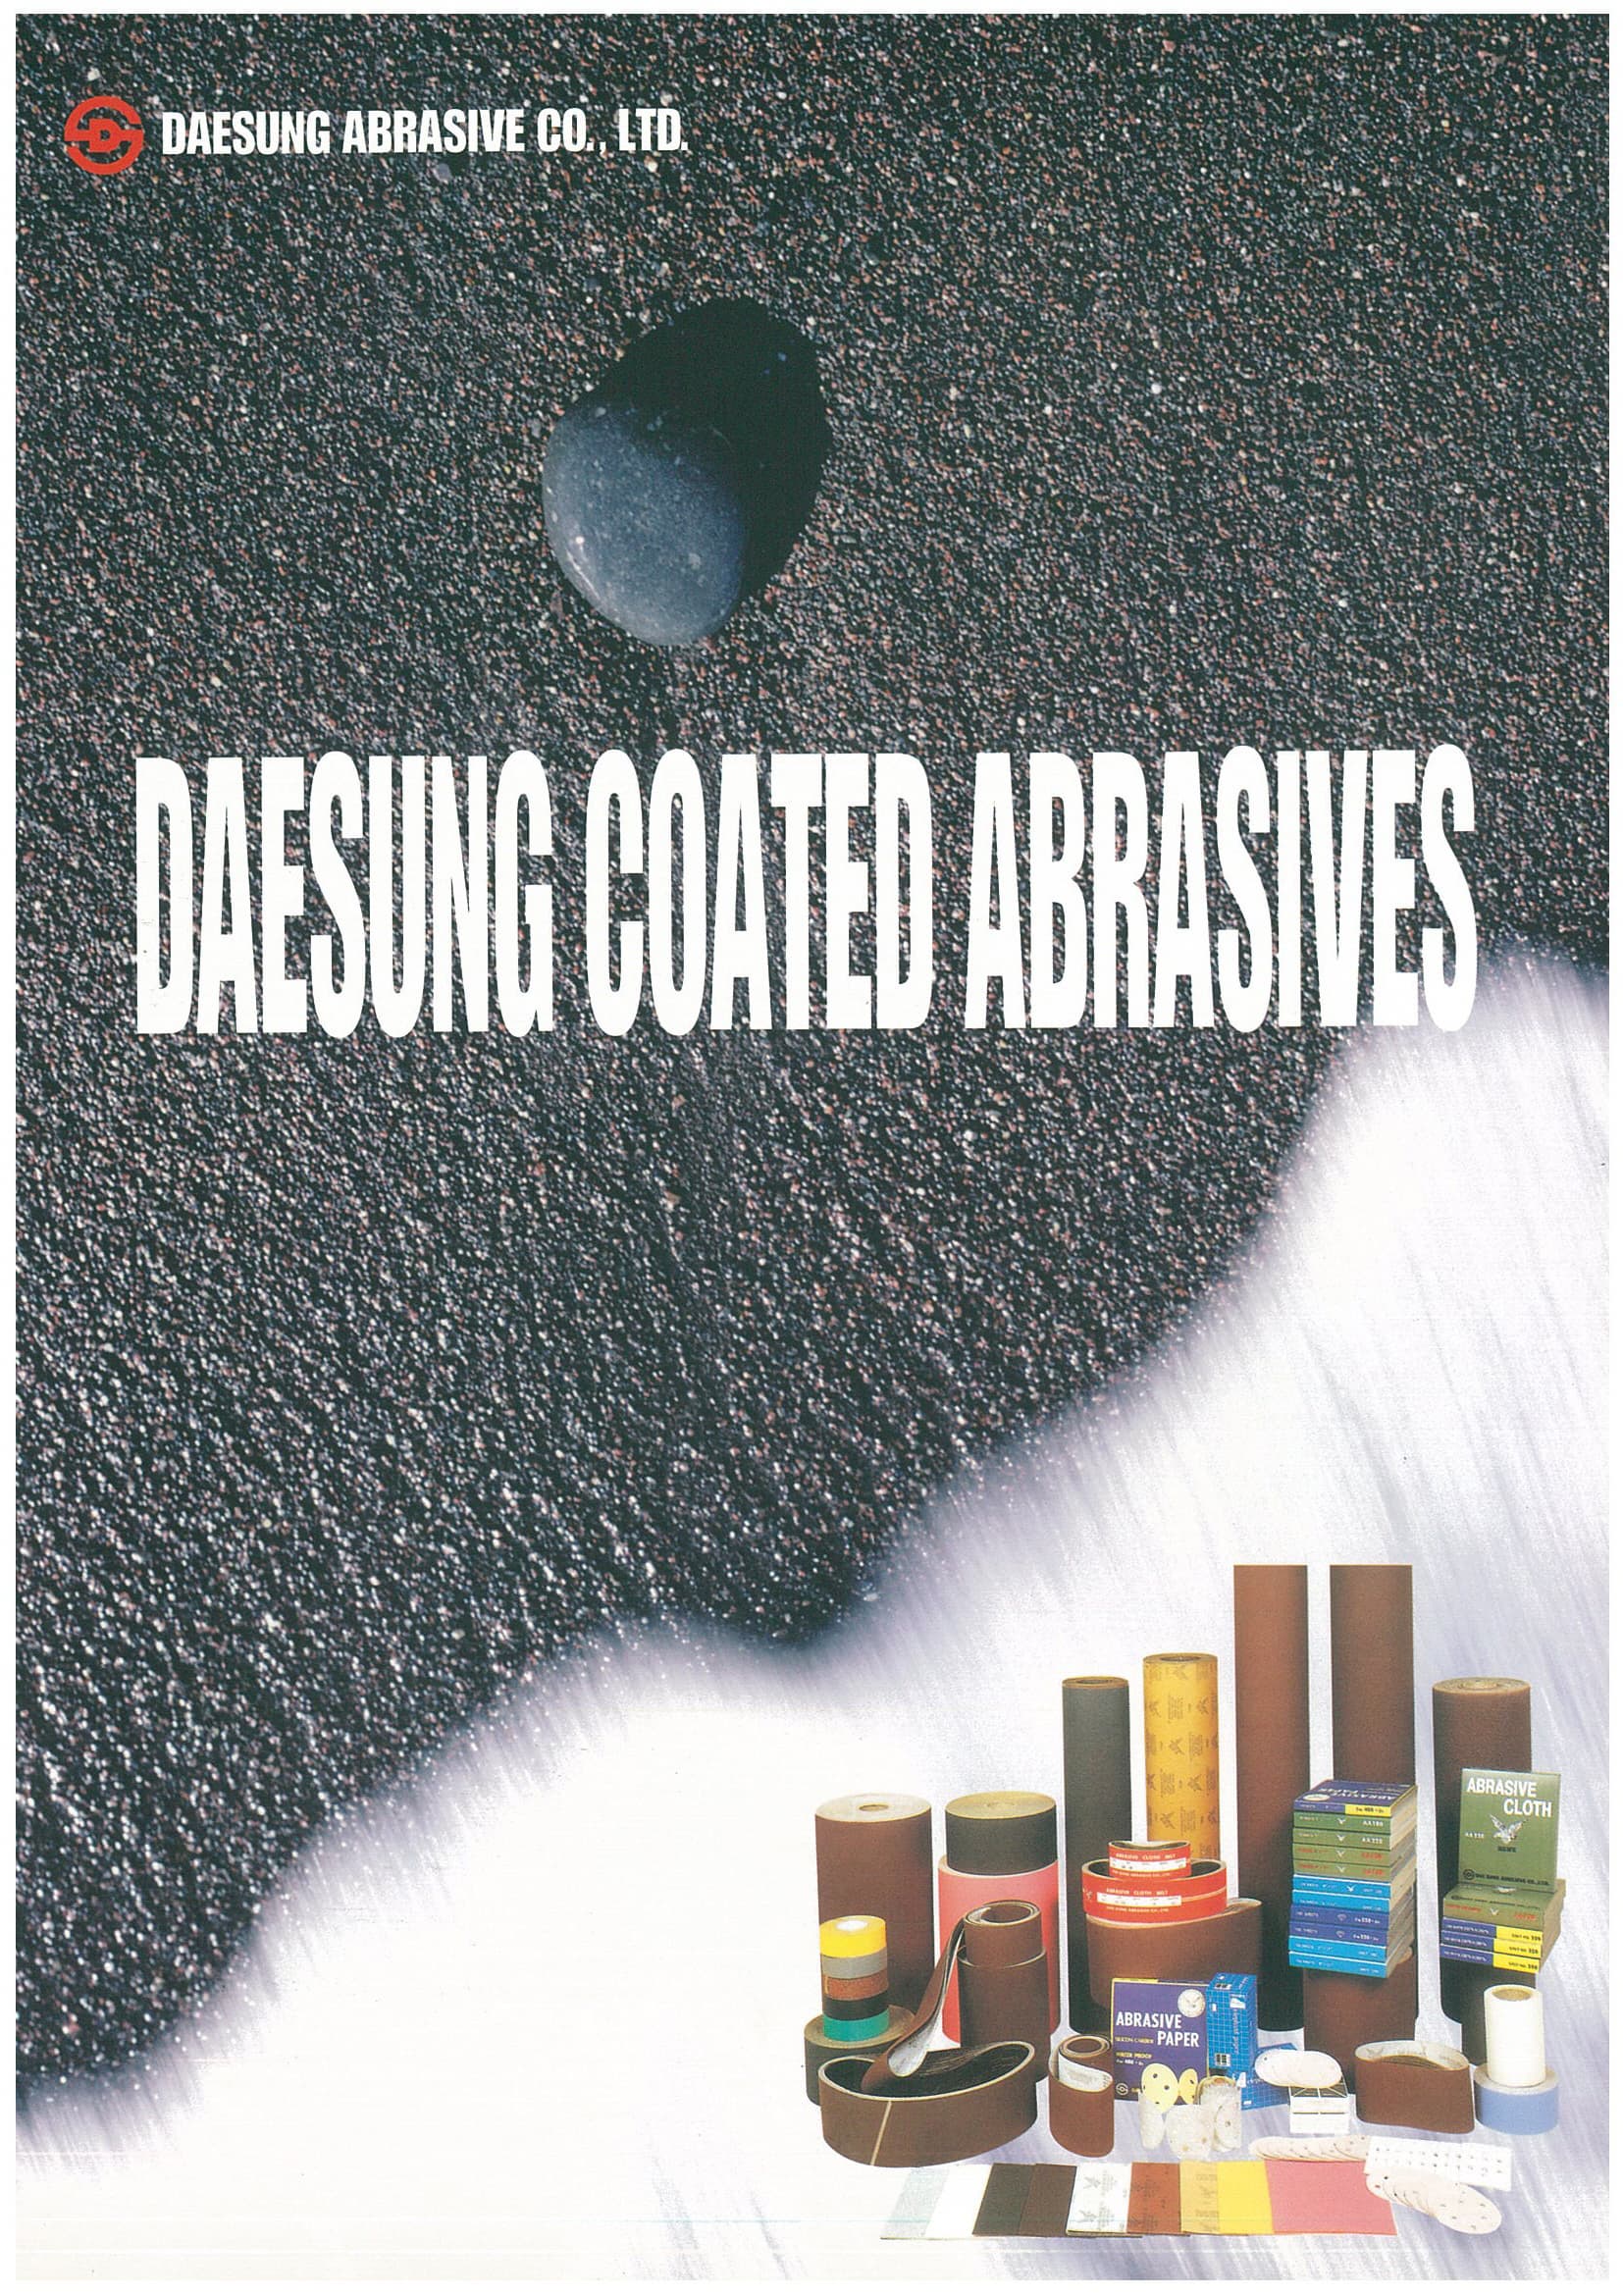 abrasive paper_ abrasive cloth_ abrasive film and polishing